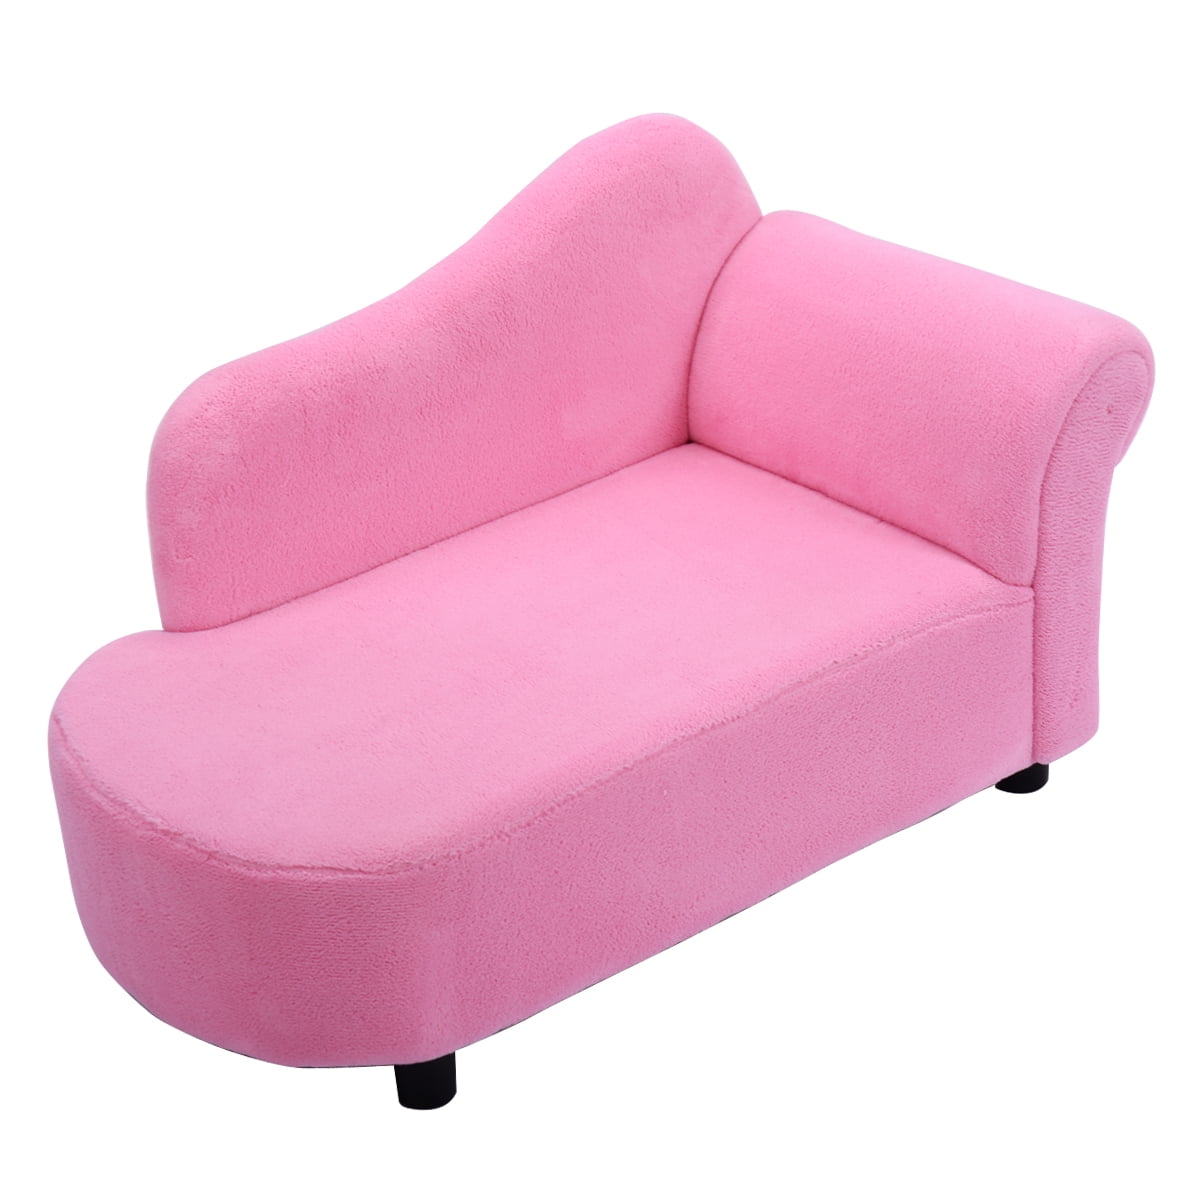 Blush Pink Sleeper Sofa - It's simple, stylish and the perfec…